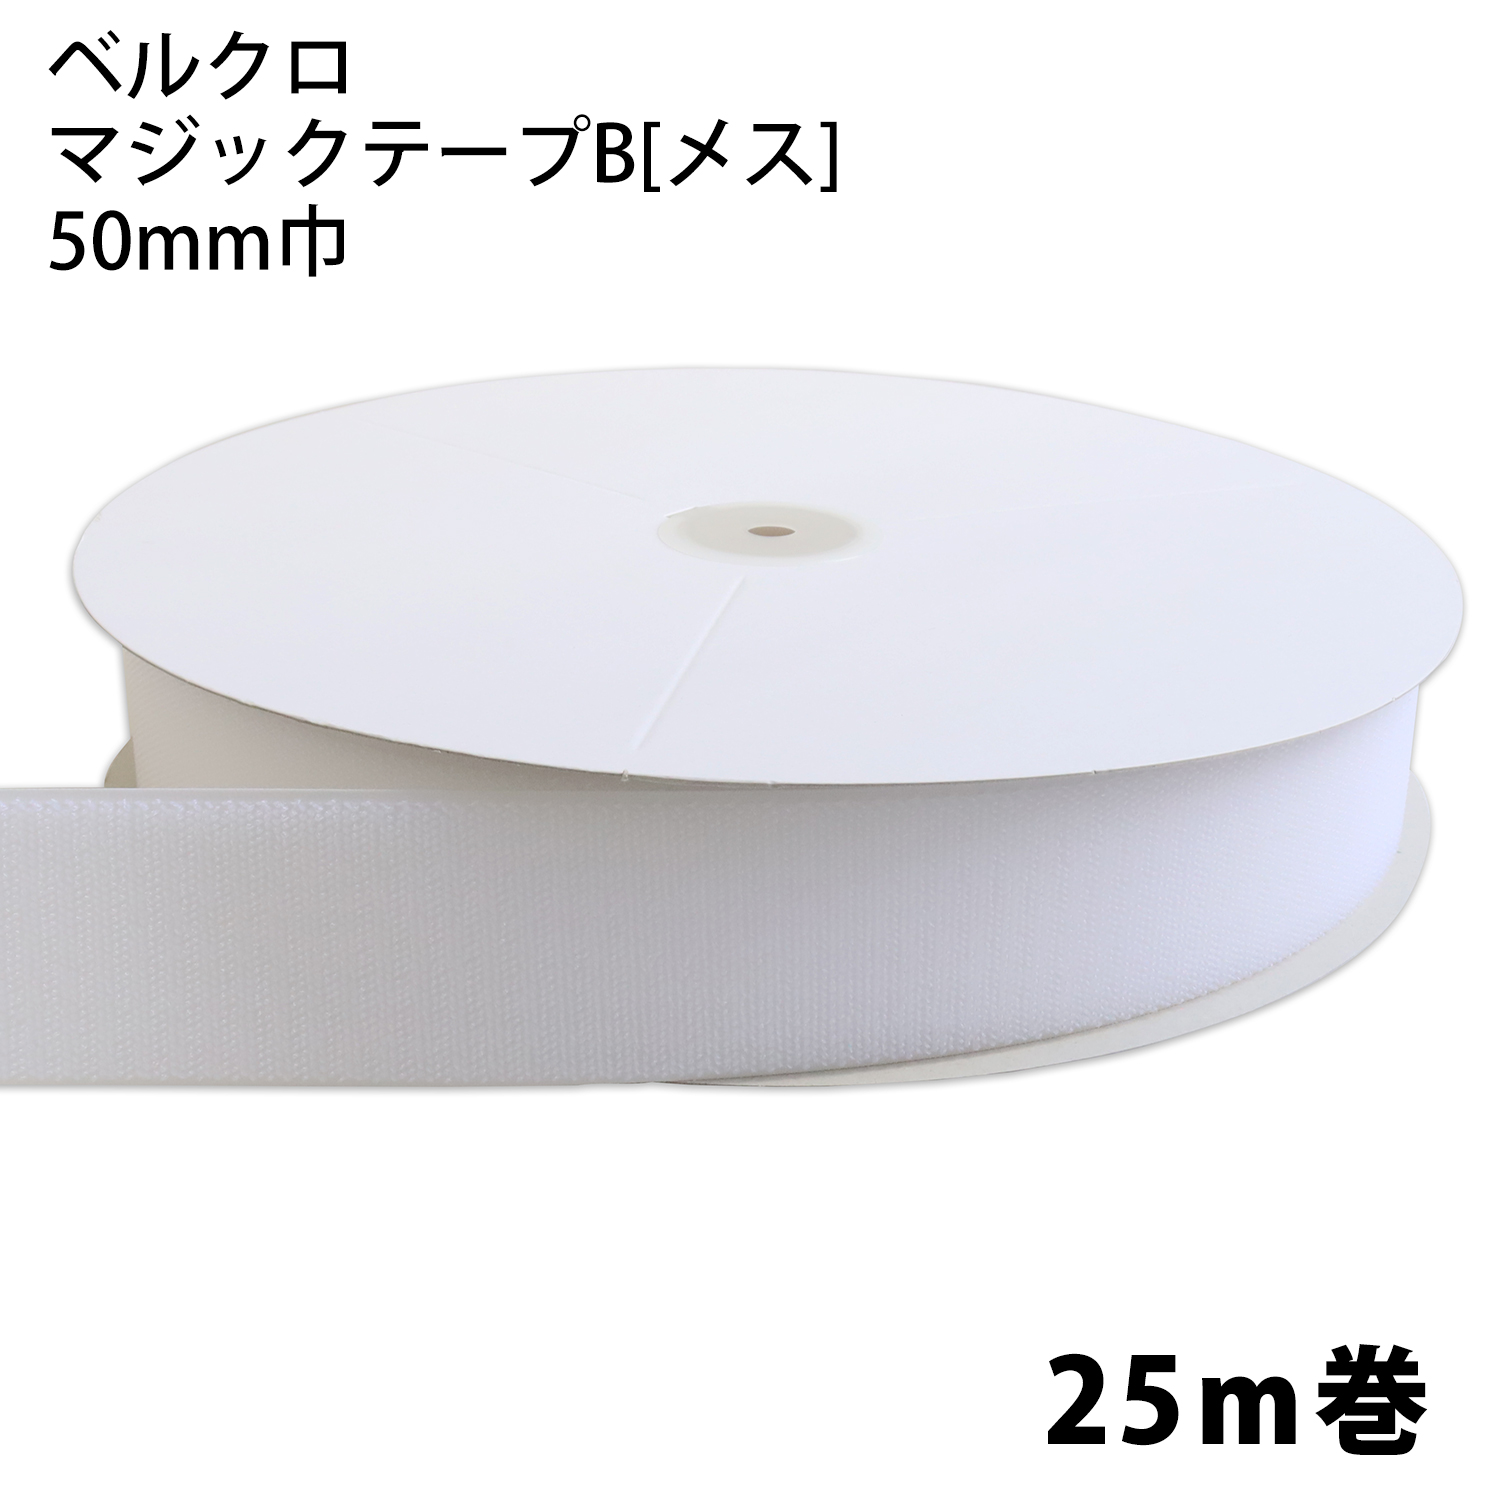 F11-BER50-25B-1 Velcro Tape B [loops] 50mm Width x 25m White (roll)